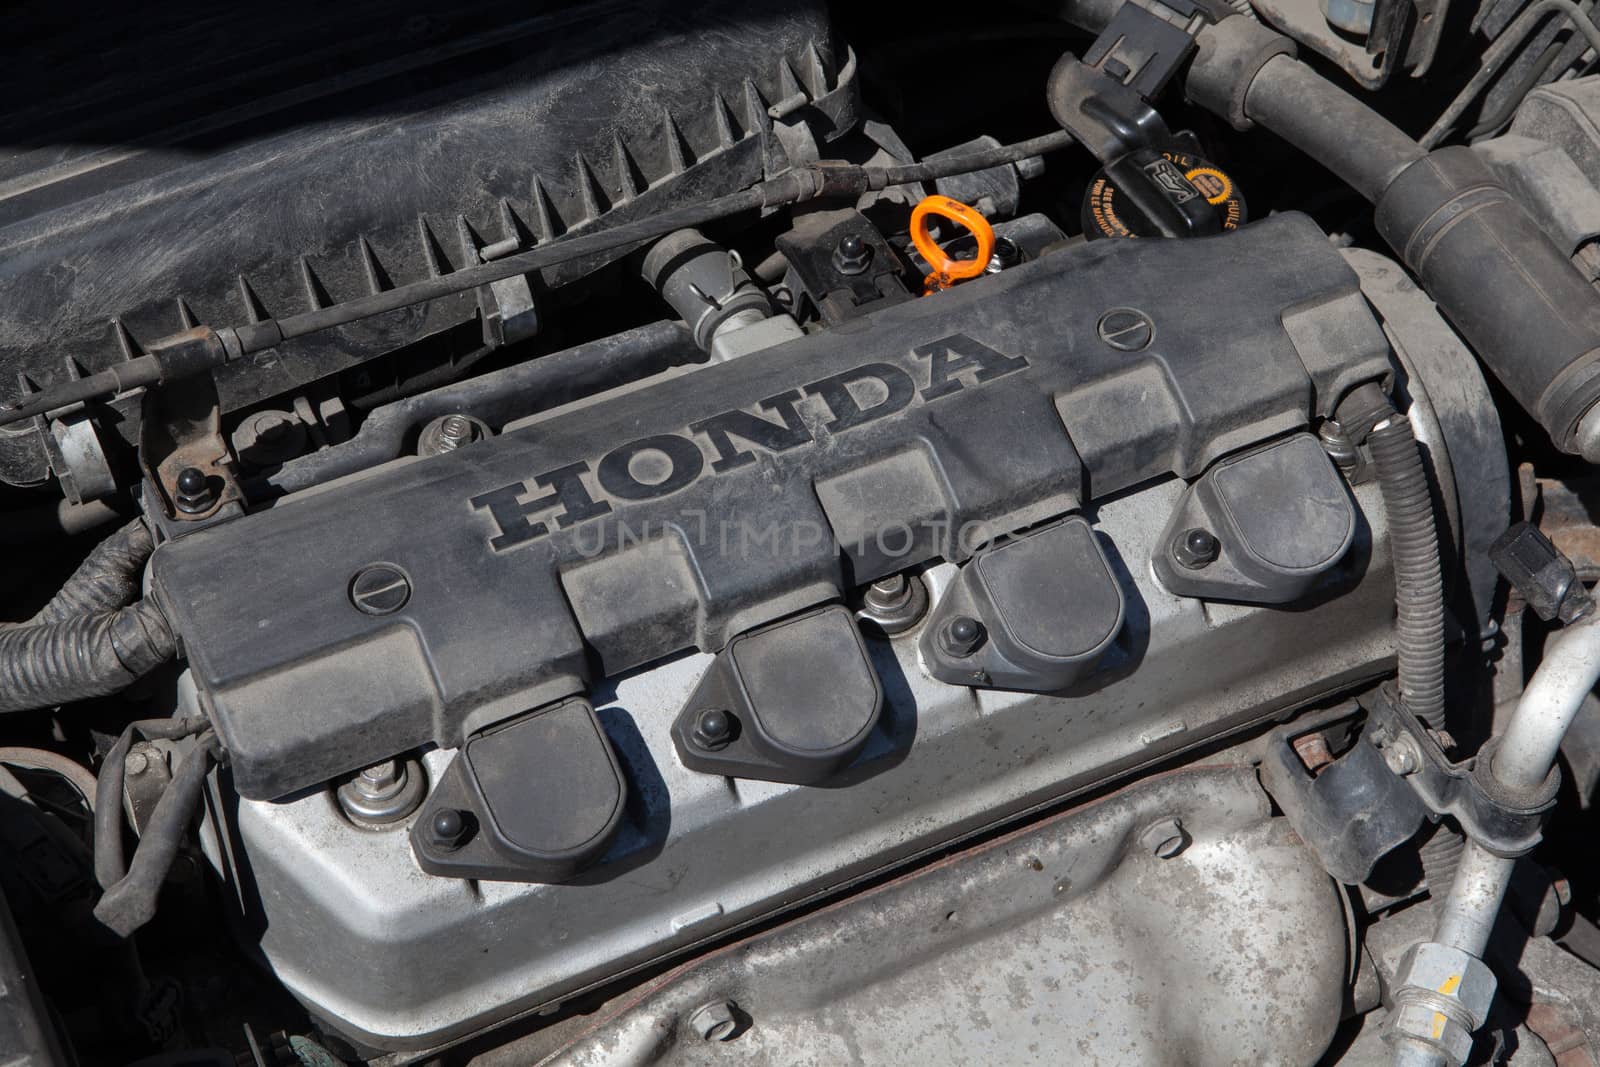 Lubaczow, Poland – July 22, 2013; Close-up of a 1.4l Honda petrol engine under the hood of a 2004 Honda Civic.